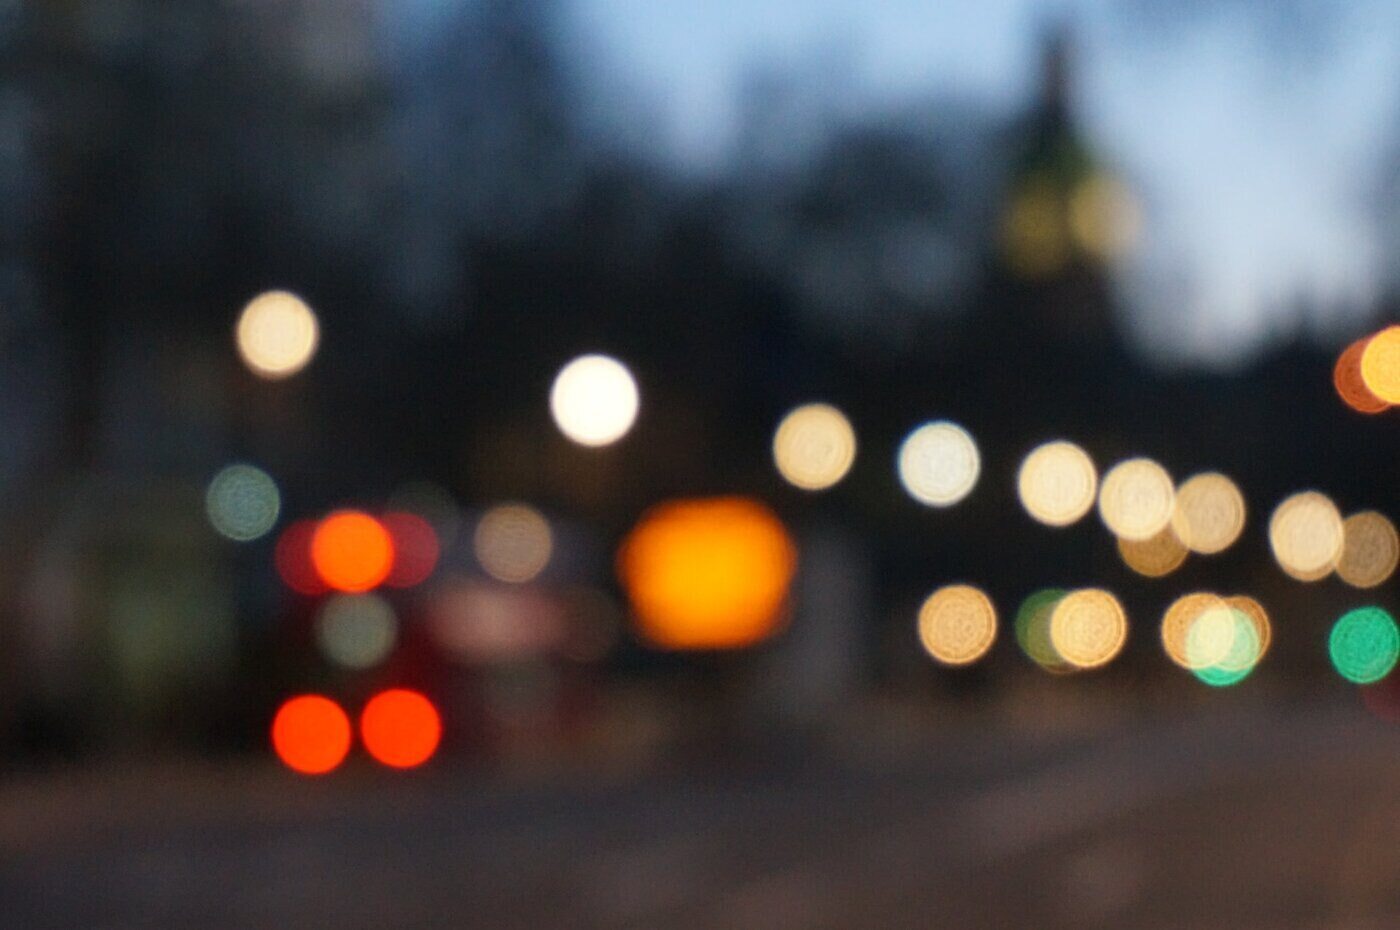 Blurred image of streetlights - saving money and energy with solar led streetlights